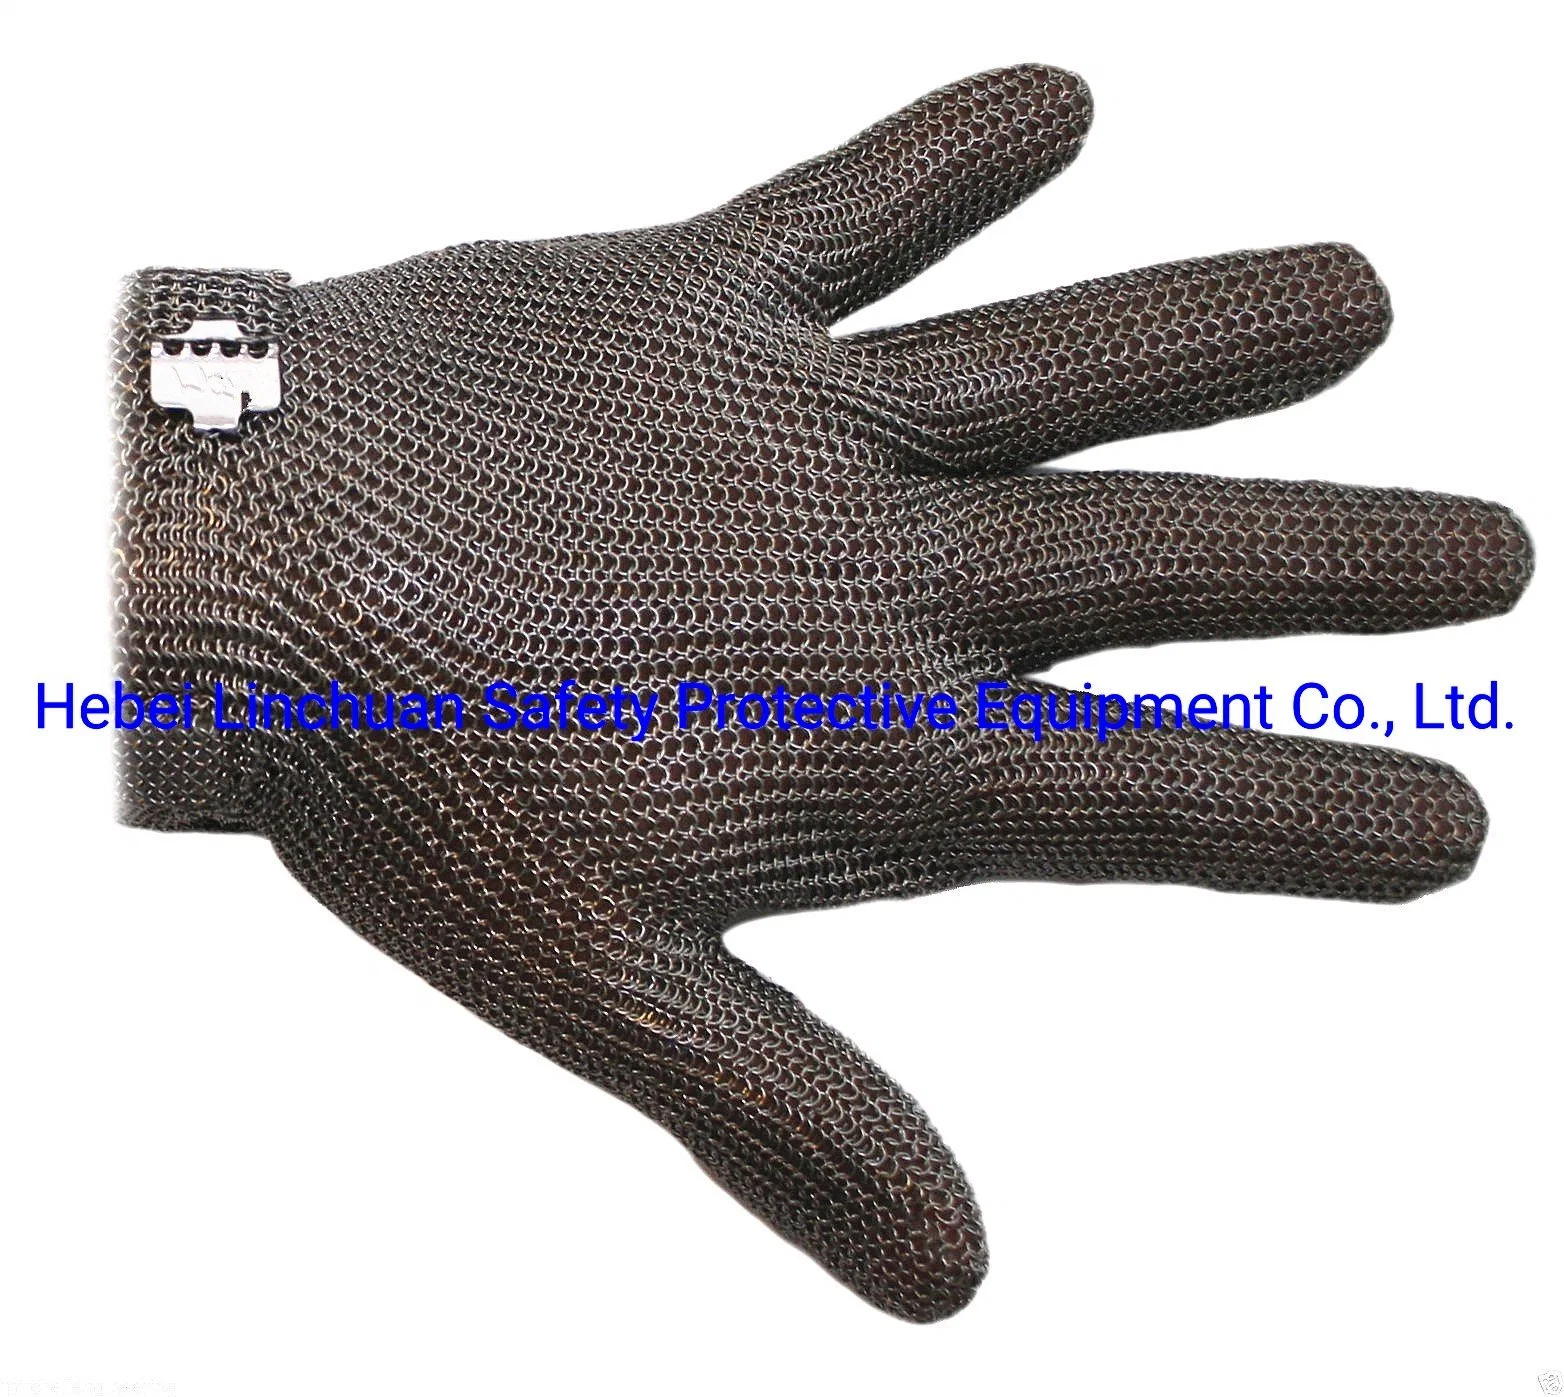 5 Finger Metal Mesh Glove/ Stainless Steel Protective Glove/ Safety Work/ Butcher Glove/Steel Cut Resistant Glove/ Anti Cut Glove/ Butcher Work Safety Glove